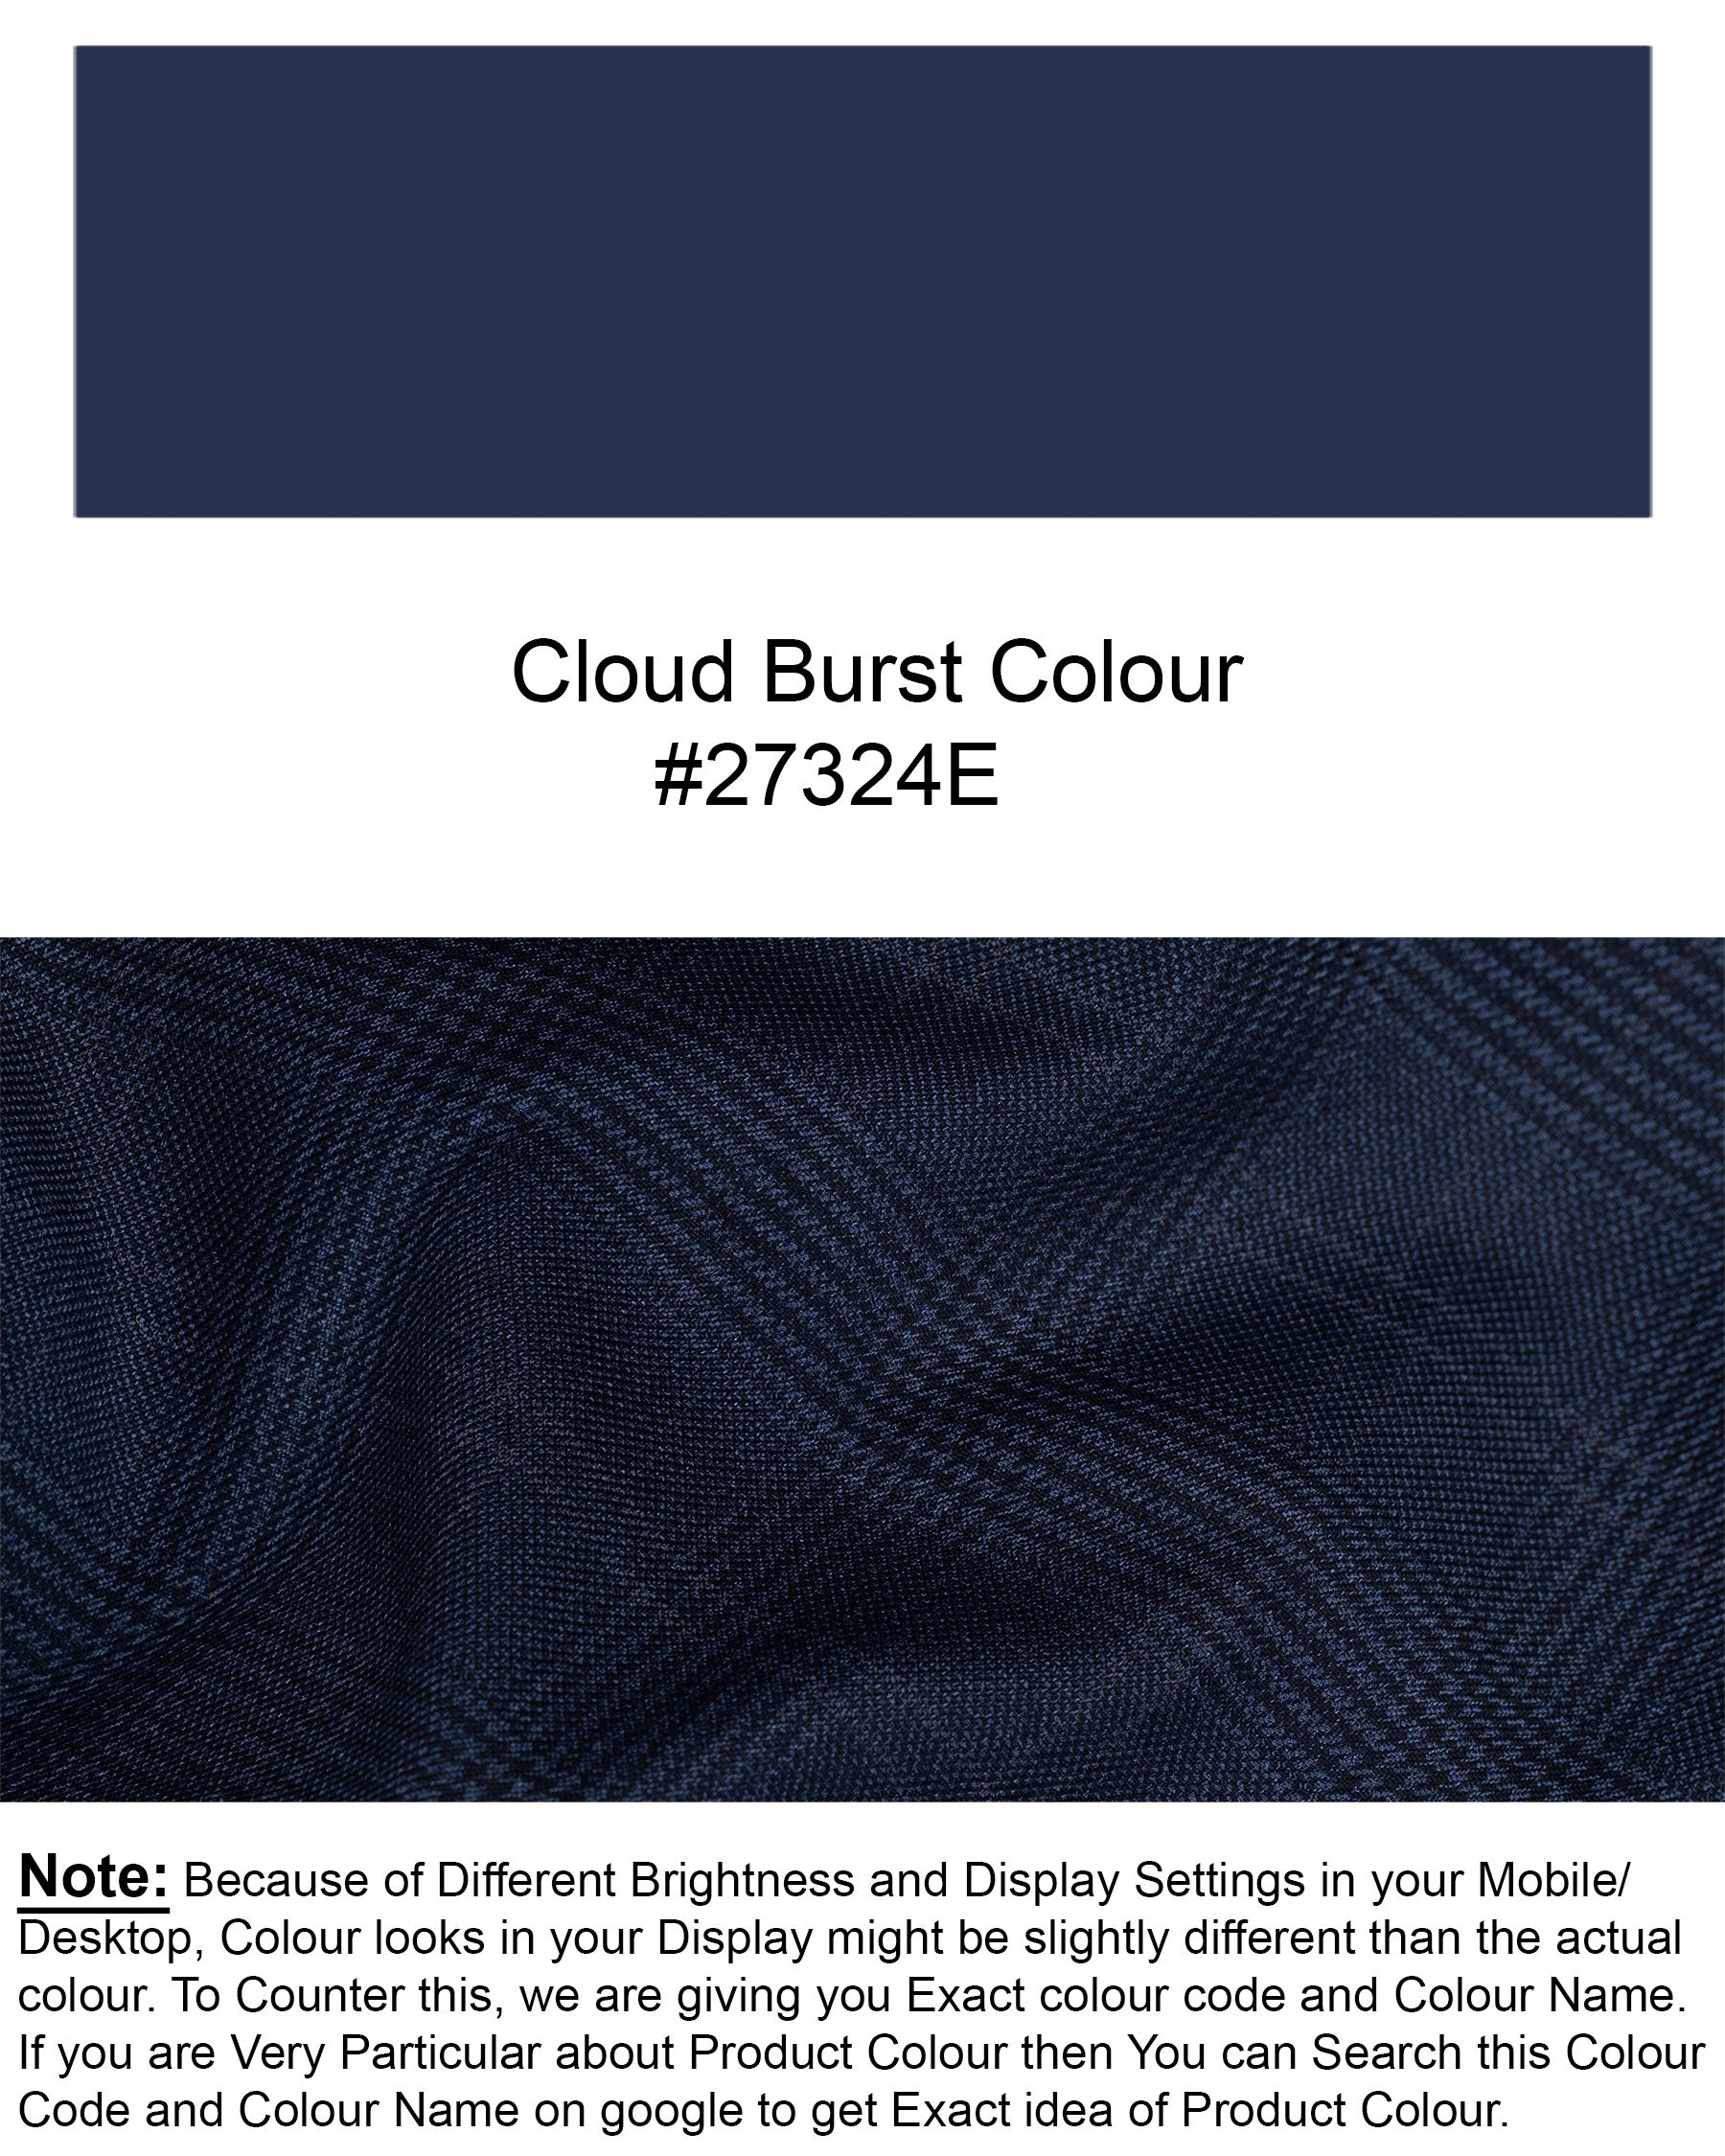 Cloud Burst Blue Super fine Subtle Checkered Woolrich Cross buttoned Bandhgala Blazer BL1634-CBG-36, BL1634-CBG-38, BL1634-CBG-40, BL1634-CBG-42, BL1634-CBG-44, BL1634-CBG-46, BL1634-CBG-48, BL1634-CBG-50, BL1634-CBG-52, BL1634-CBG-54, BL1634-CBG-56, BL1634-CBG-58, BL1634-CBG-60